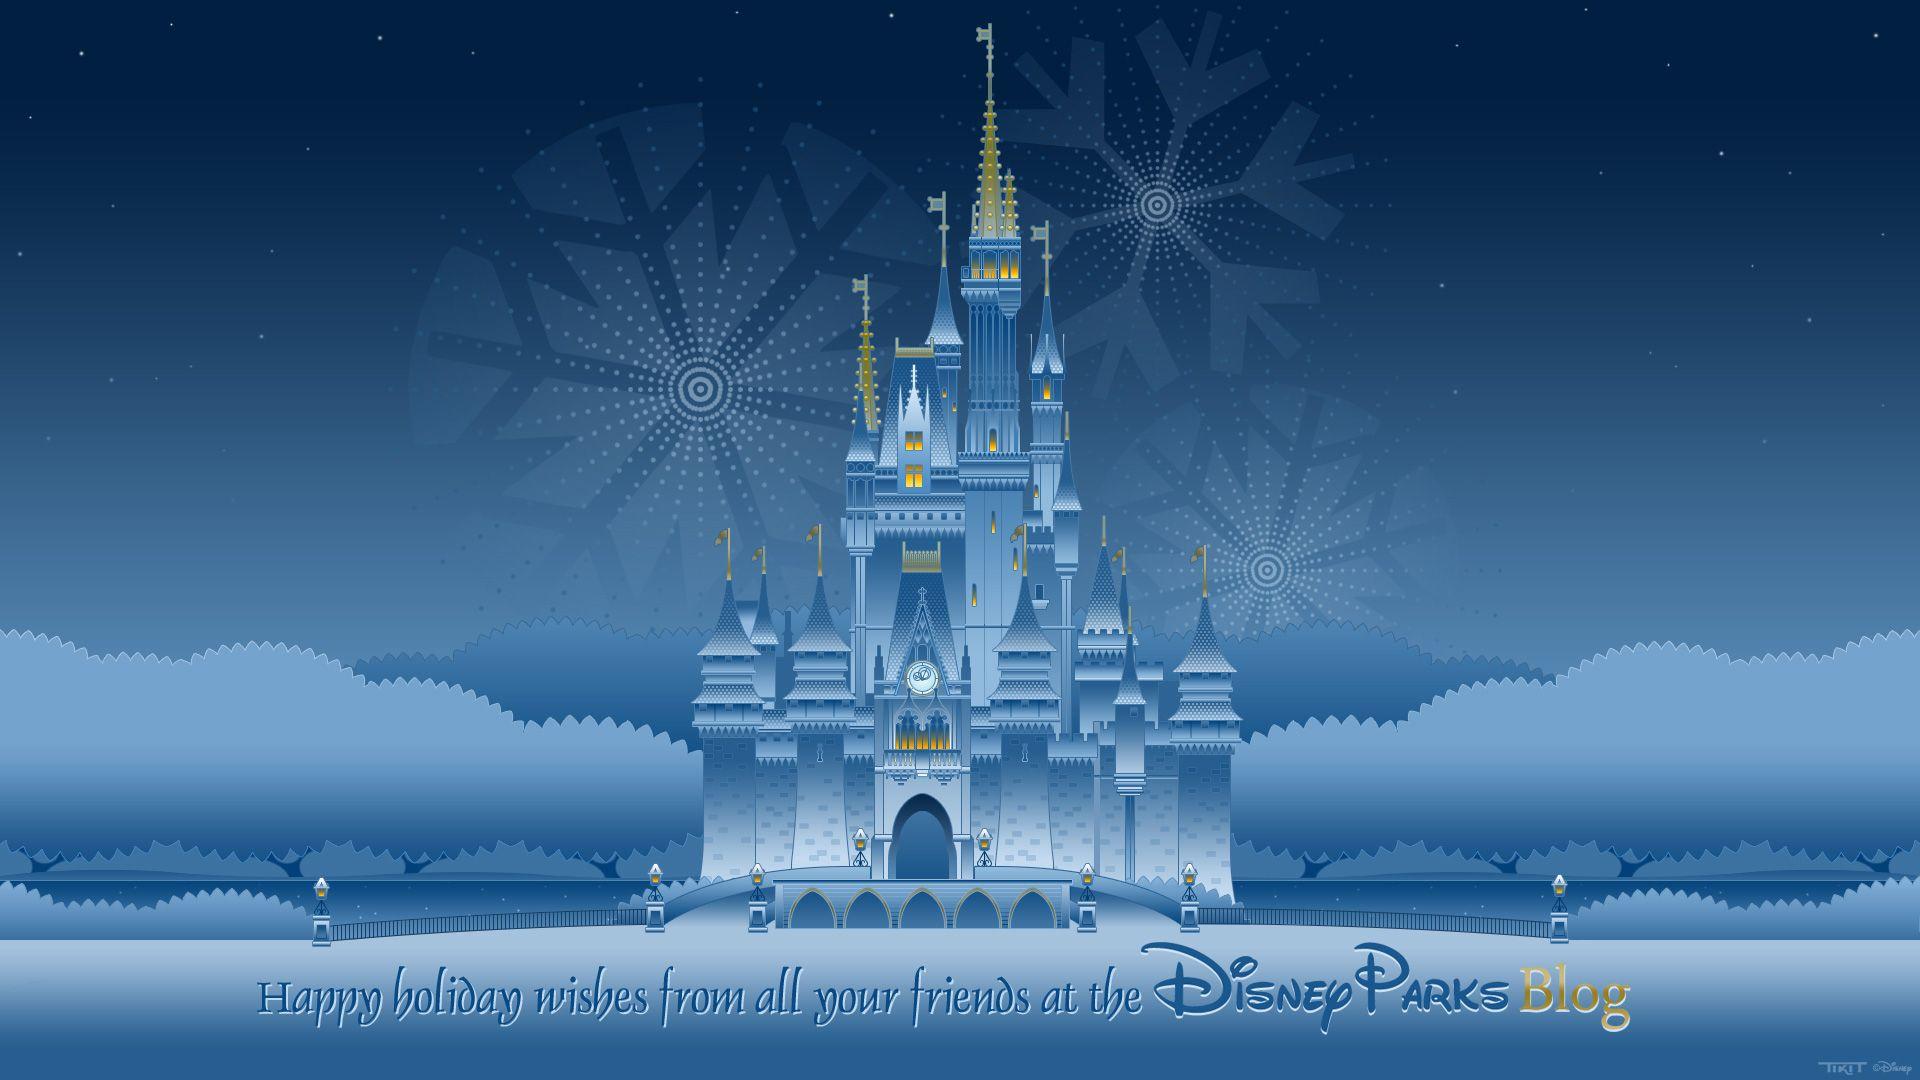 Disney Parks Blog Holiday Wallpaper. Disney Parks Blog